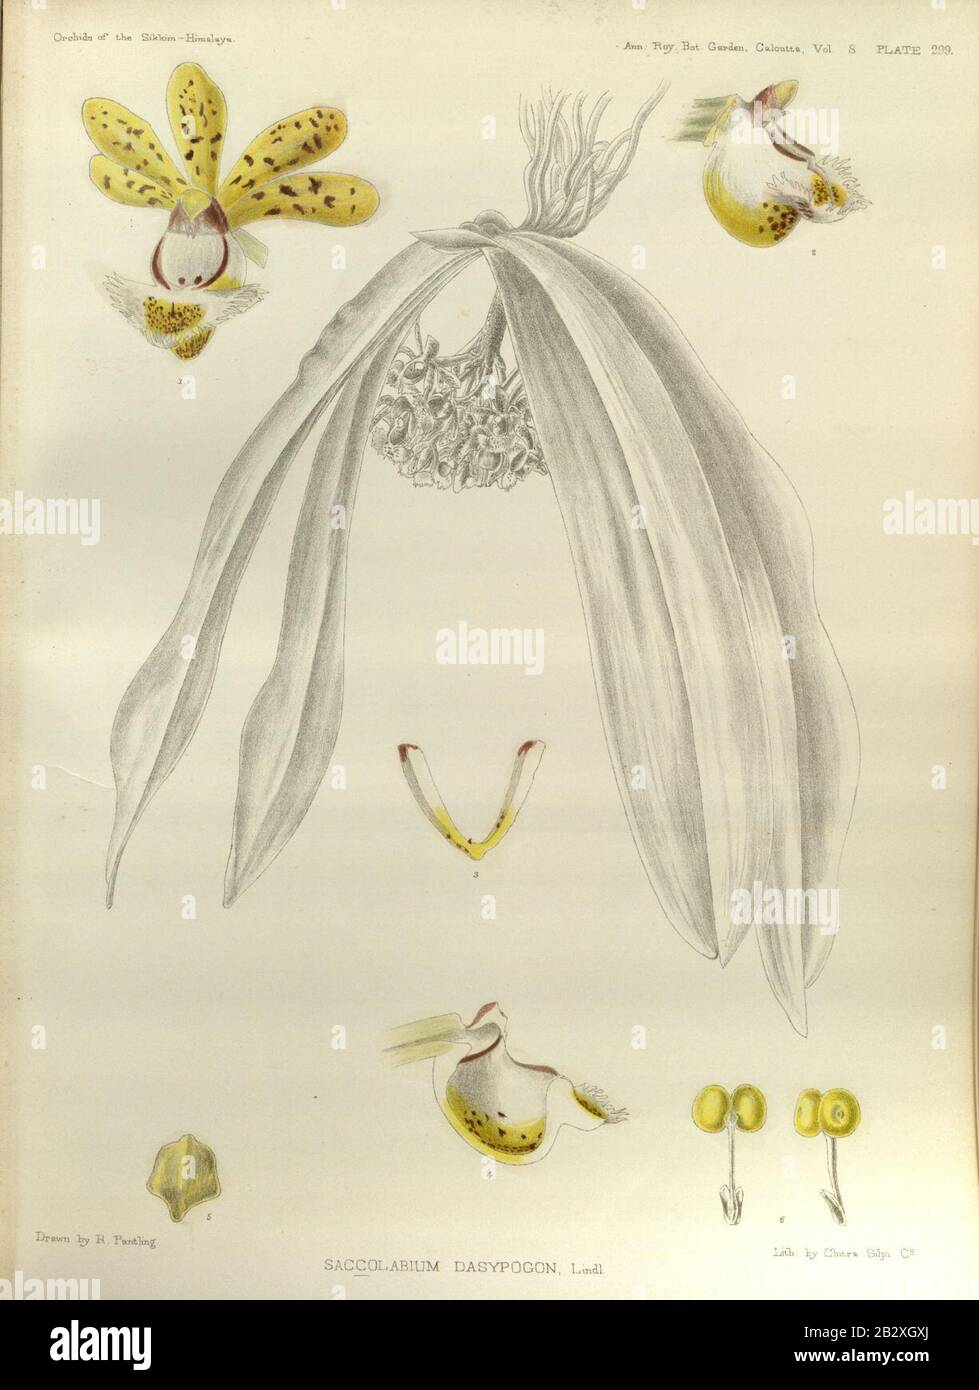 Gastrochilus obliquus (as Saccolabium dasypogon) - The Orchids of the Sikkim-Himalaya pl 299 (1889). Stock Photo